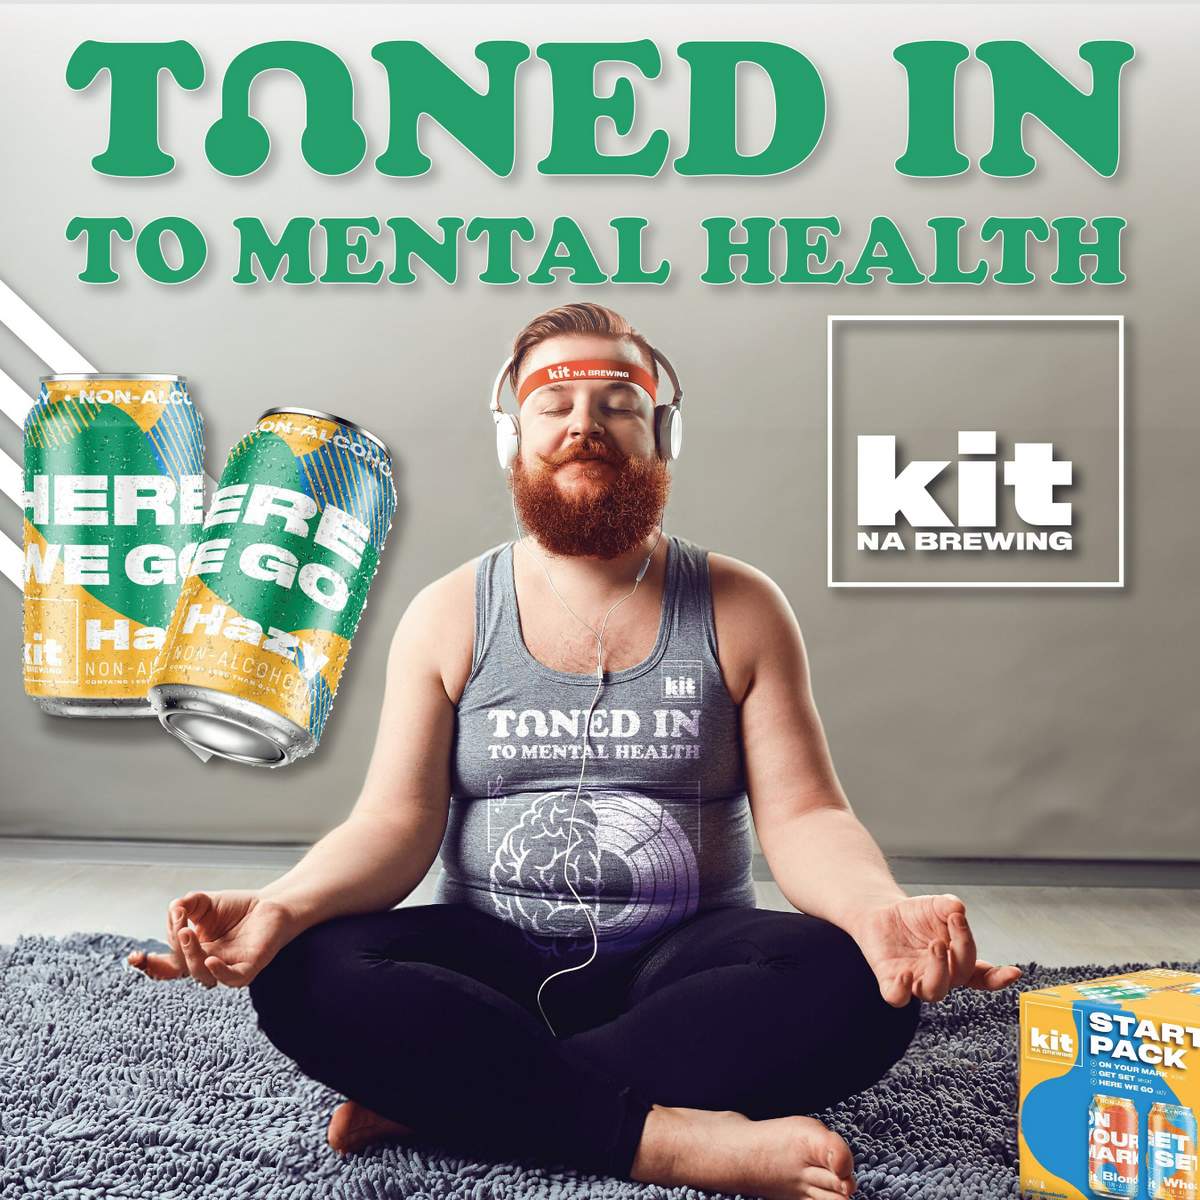 Kit NA Yoga Man Tuned In Mental Health